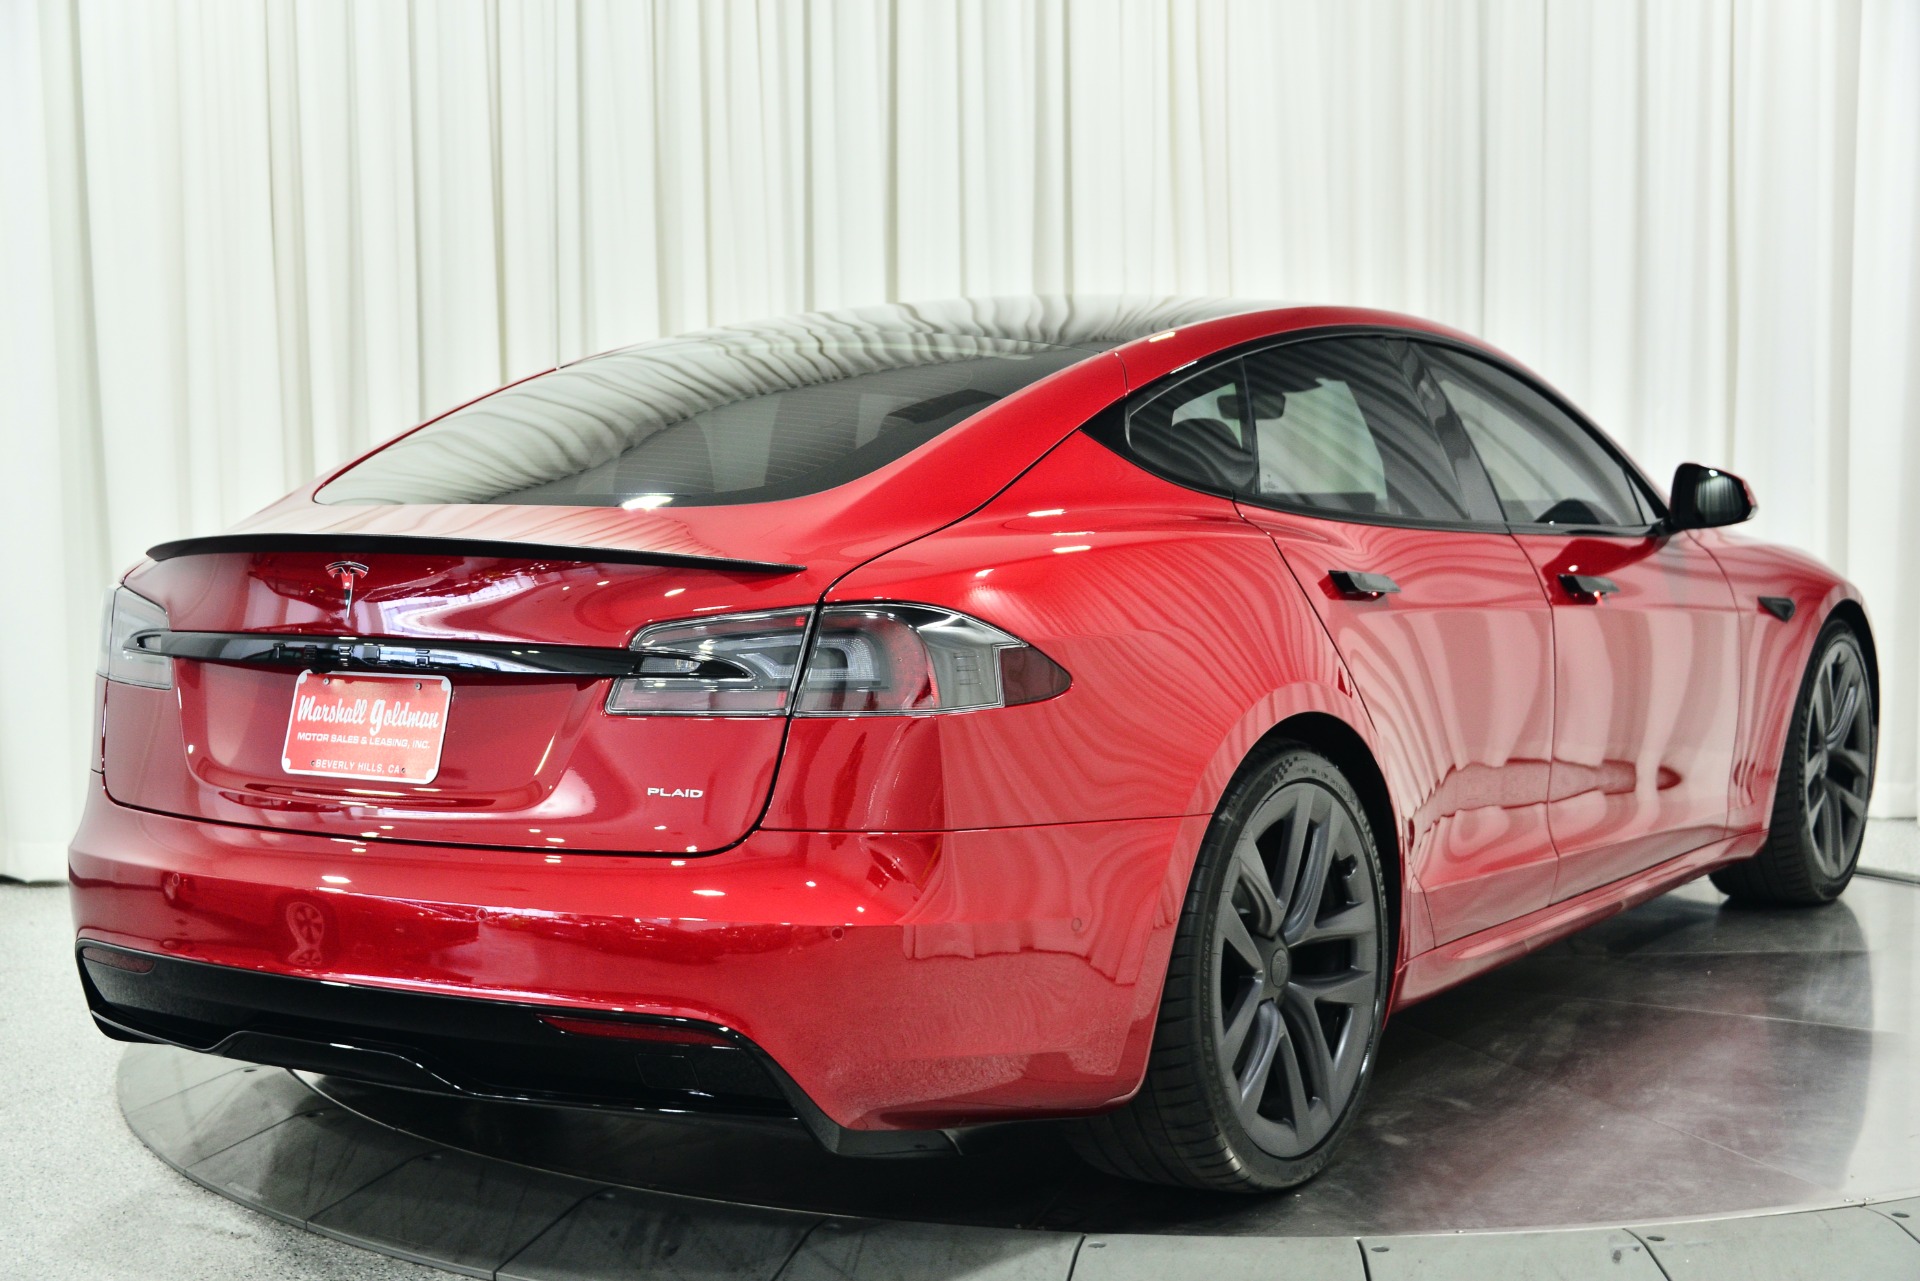 Used 2021 Tesla Model S Plaid For Sale (Sold)  Marshall Goldman Beverly  Hills Stock #B23833